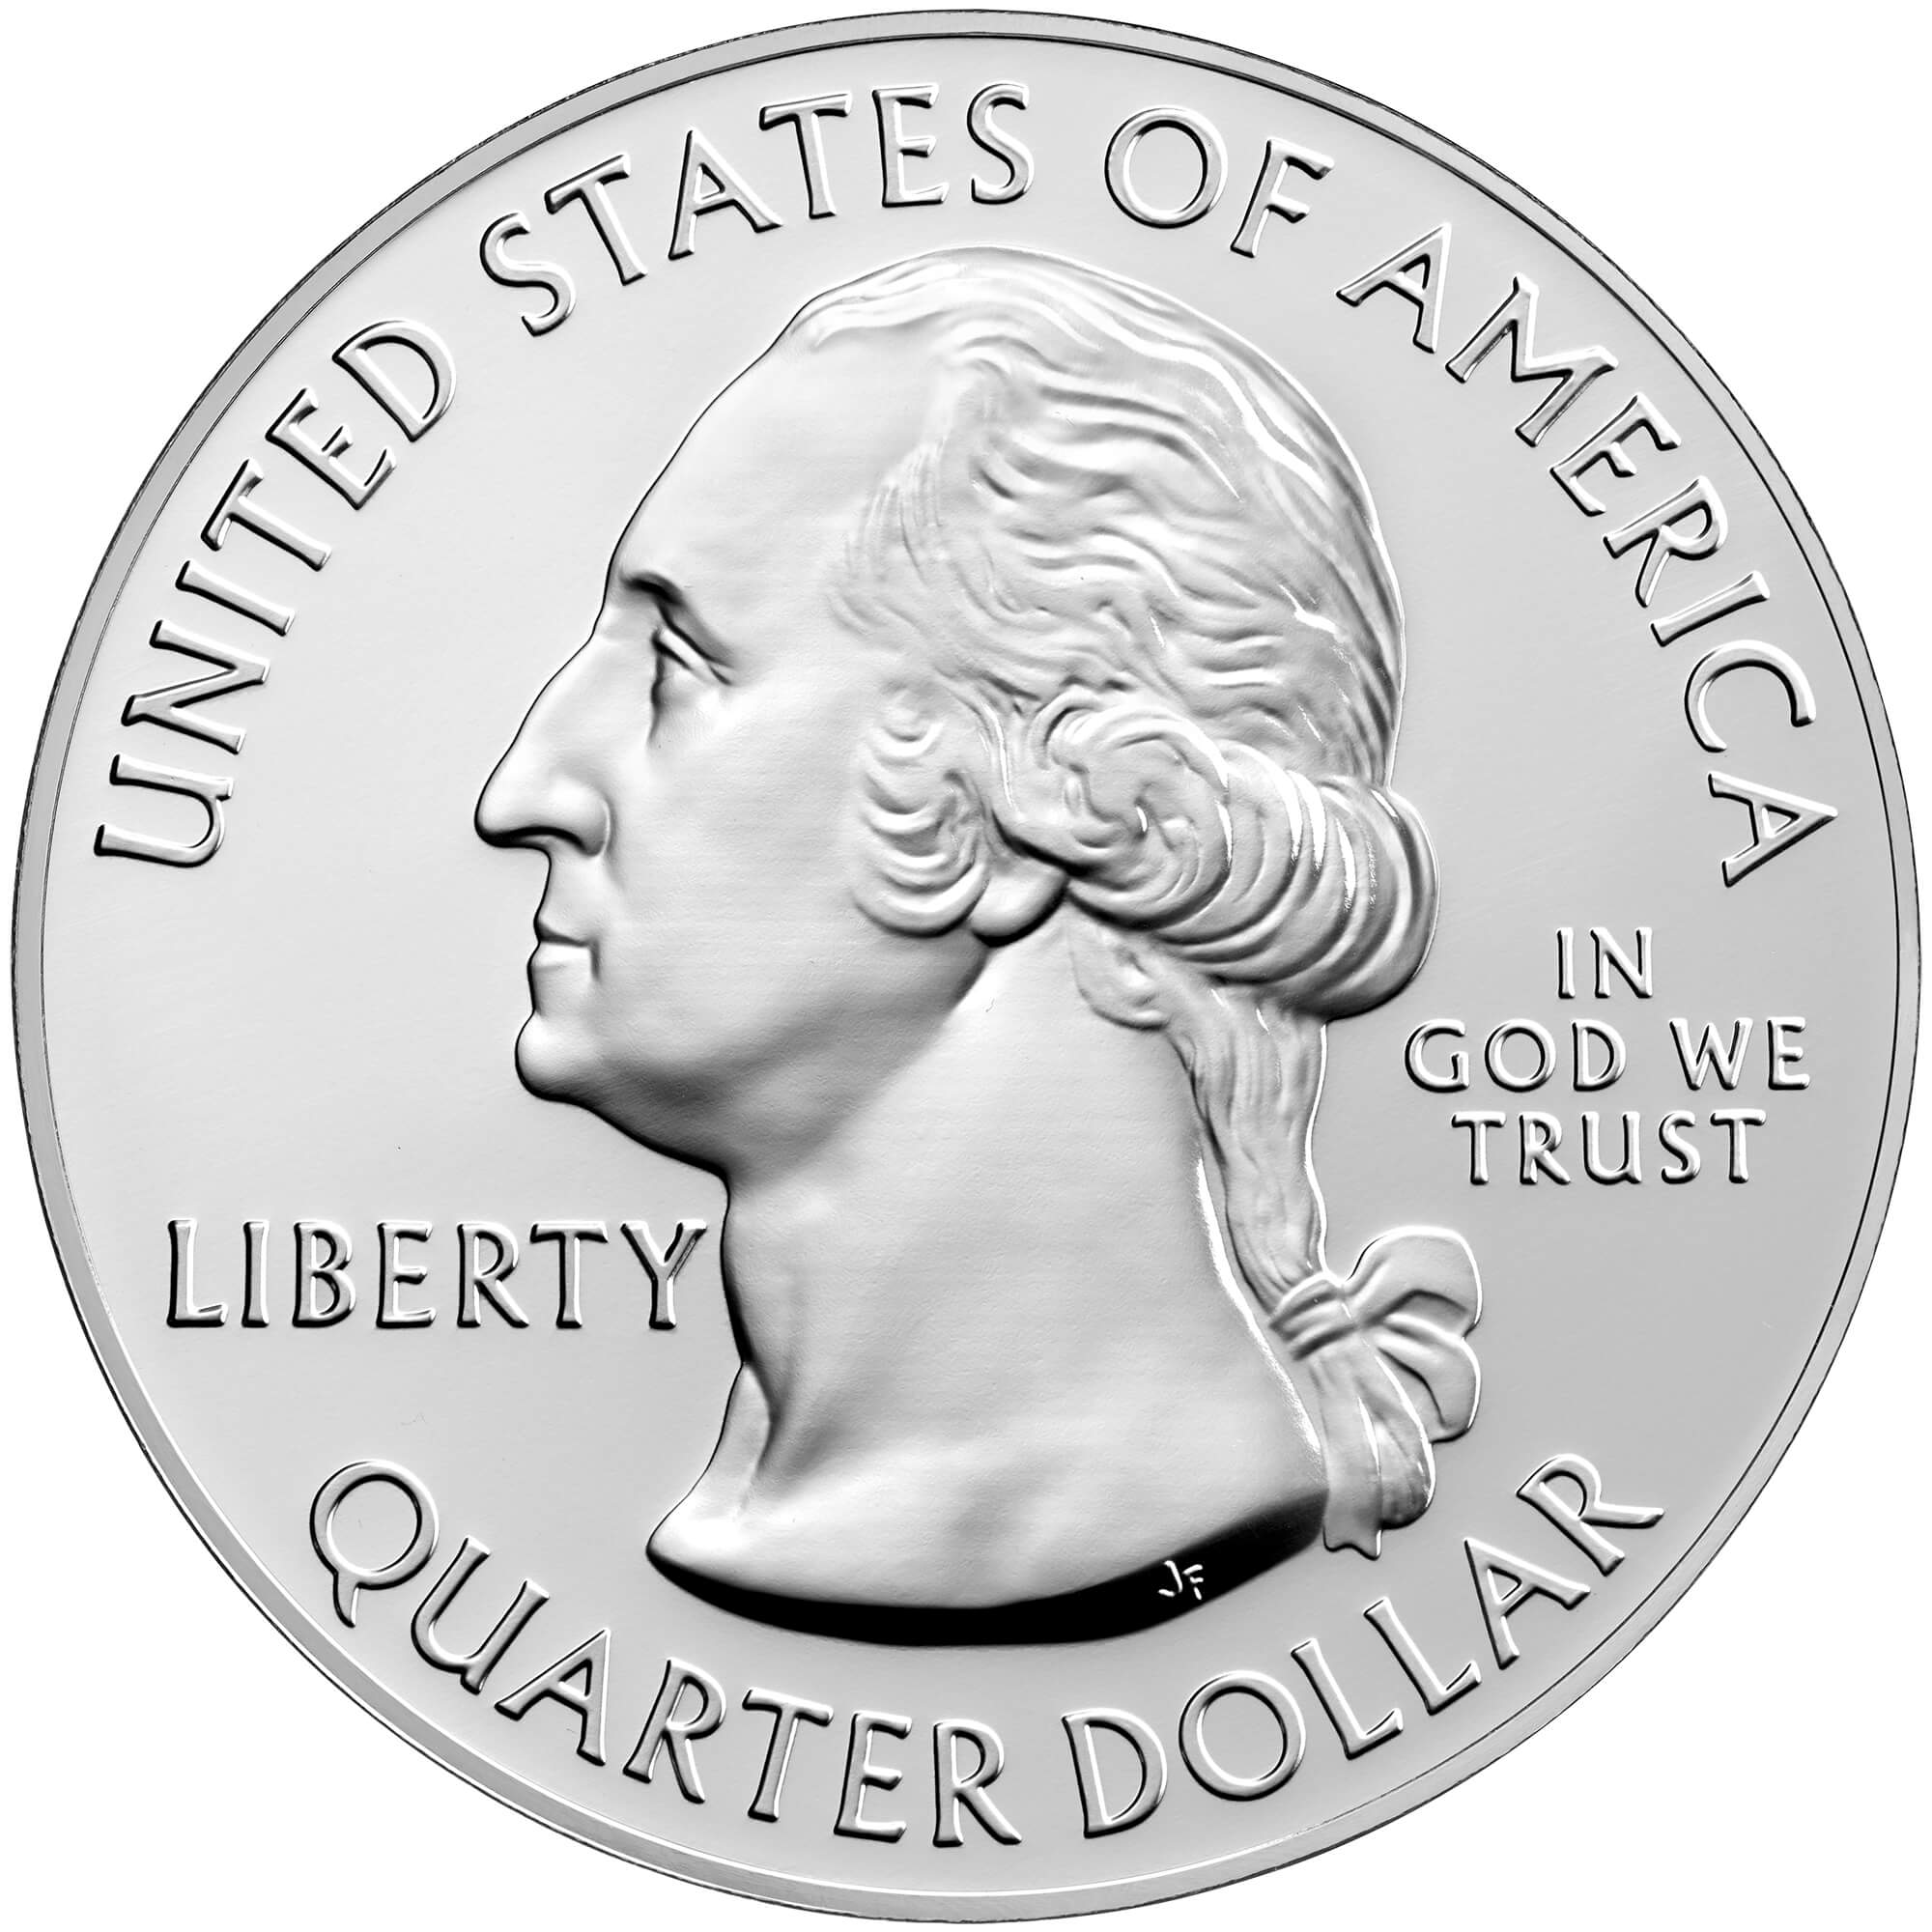 US 1/4 Dollar - Quarter 2018 no mintmark